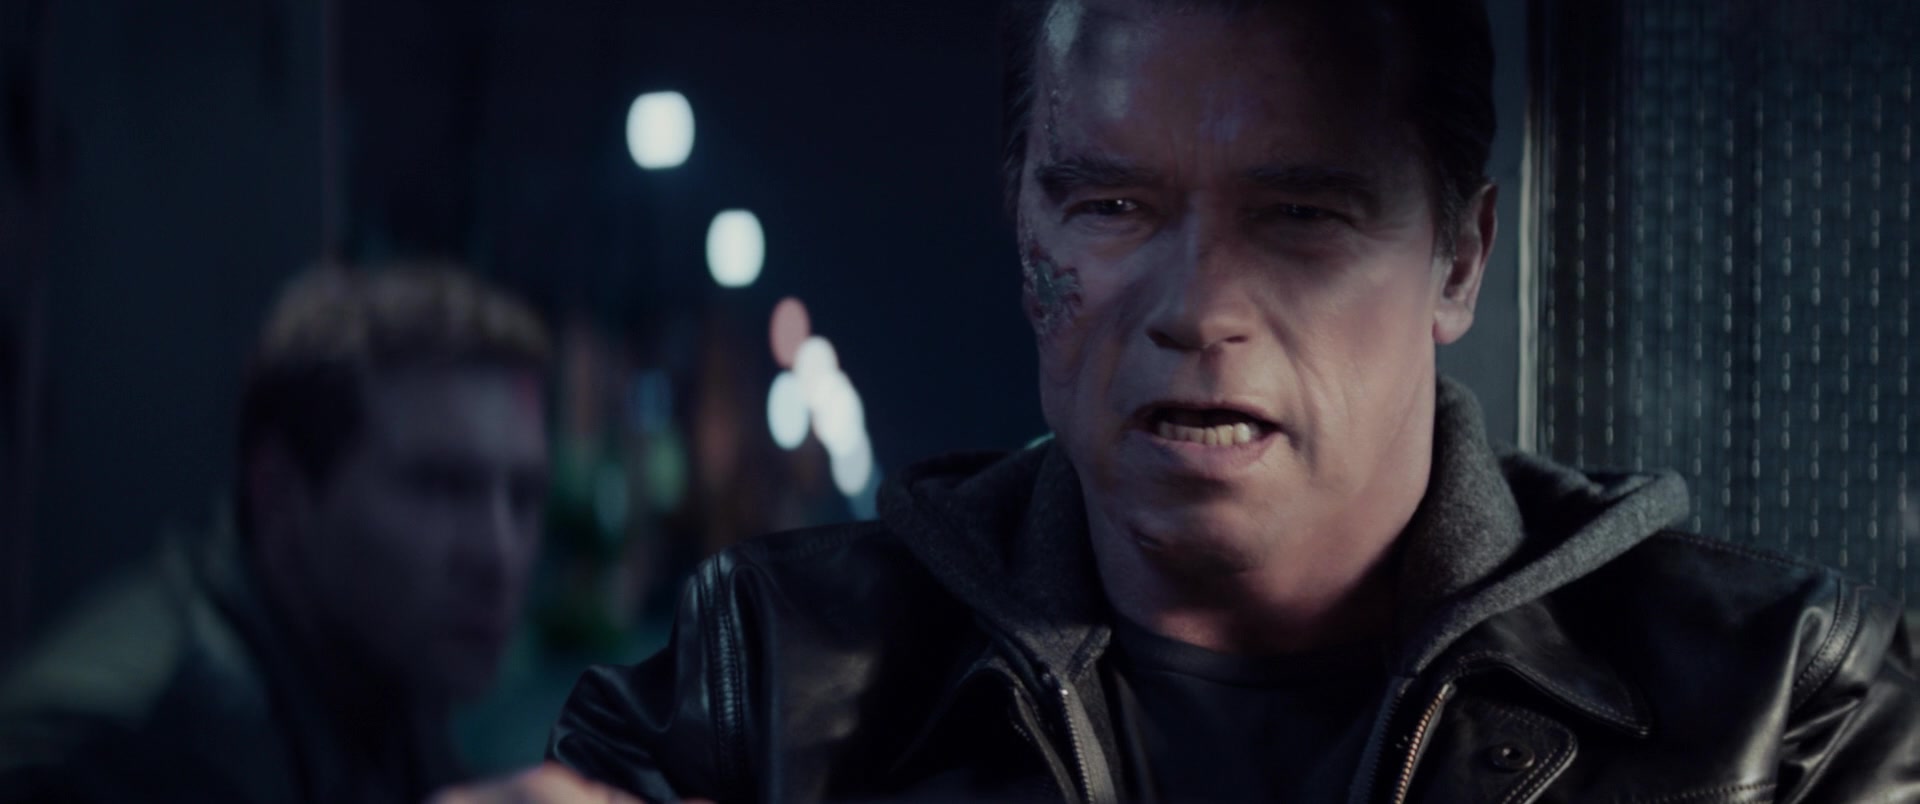 :  / Terminator: Genisys (2015/RUS/ENG) HDRip | BDRip 720p | BDRip 1080p